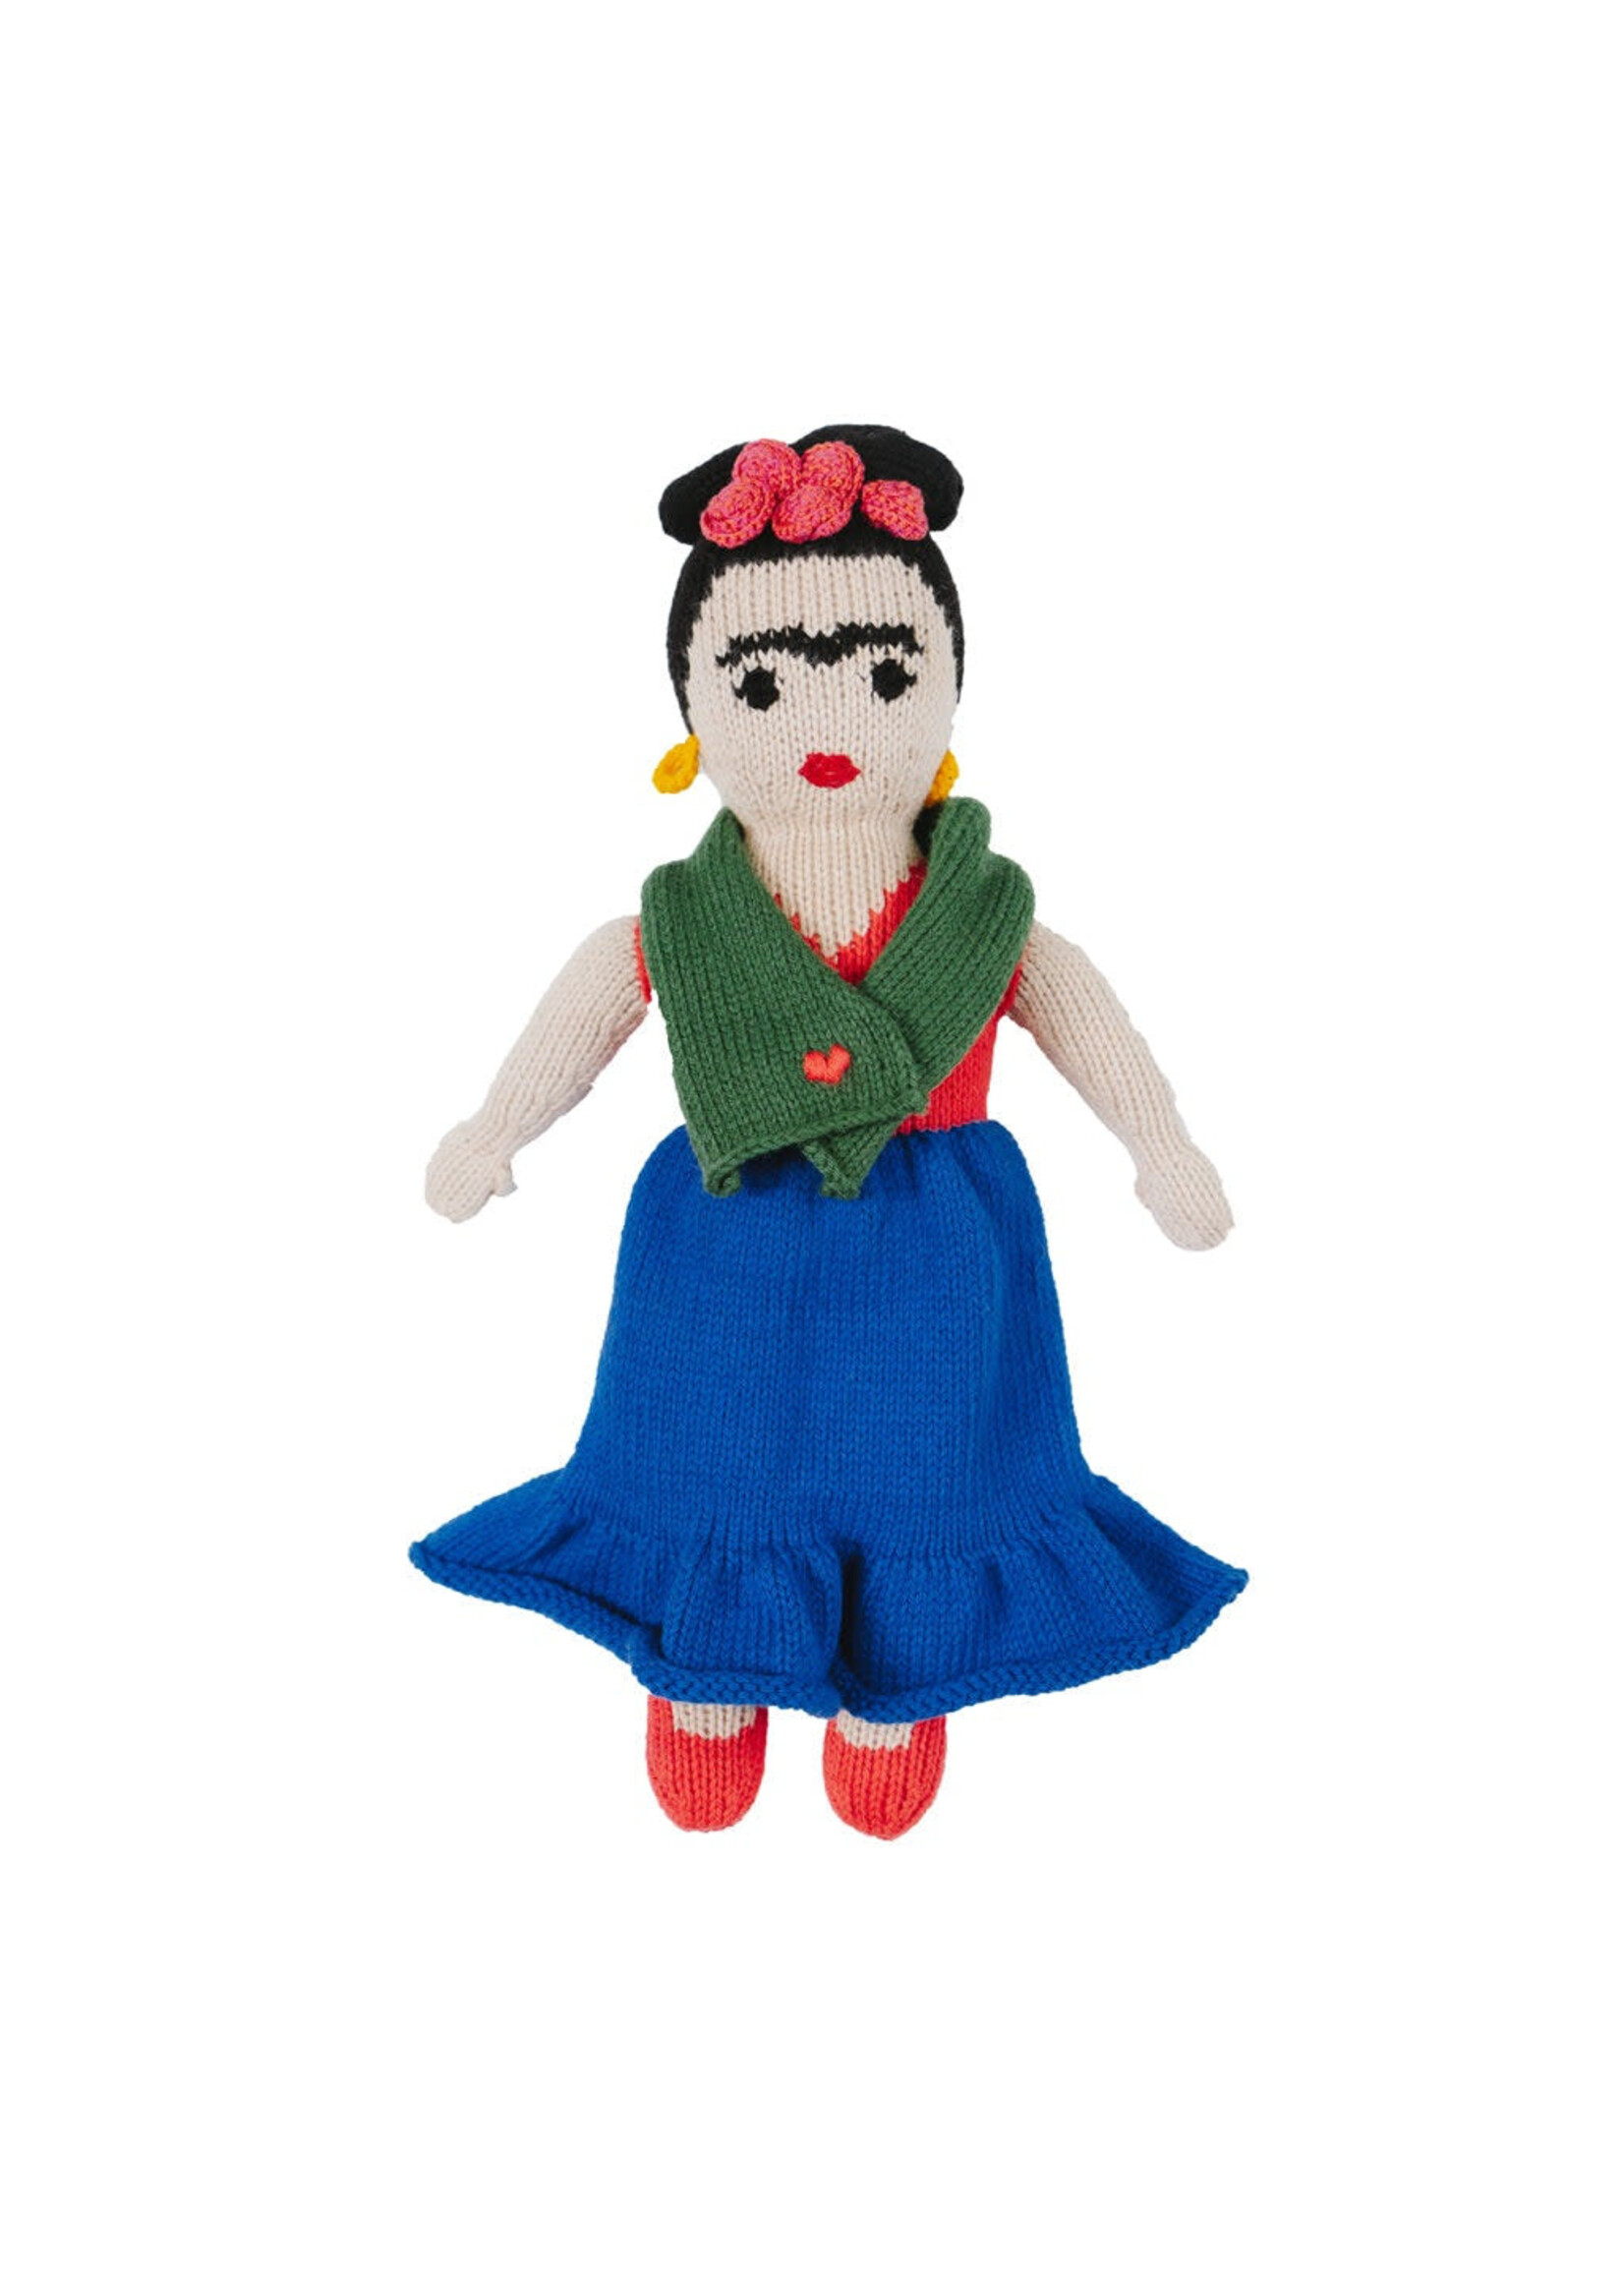 Doll - Knit Frida Kahlo